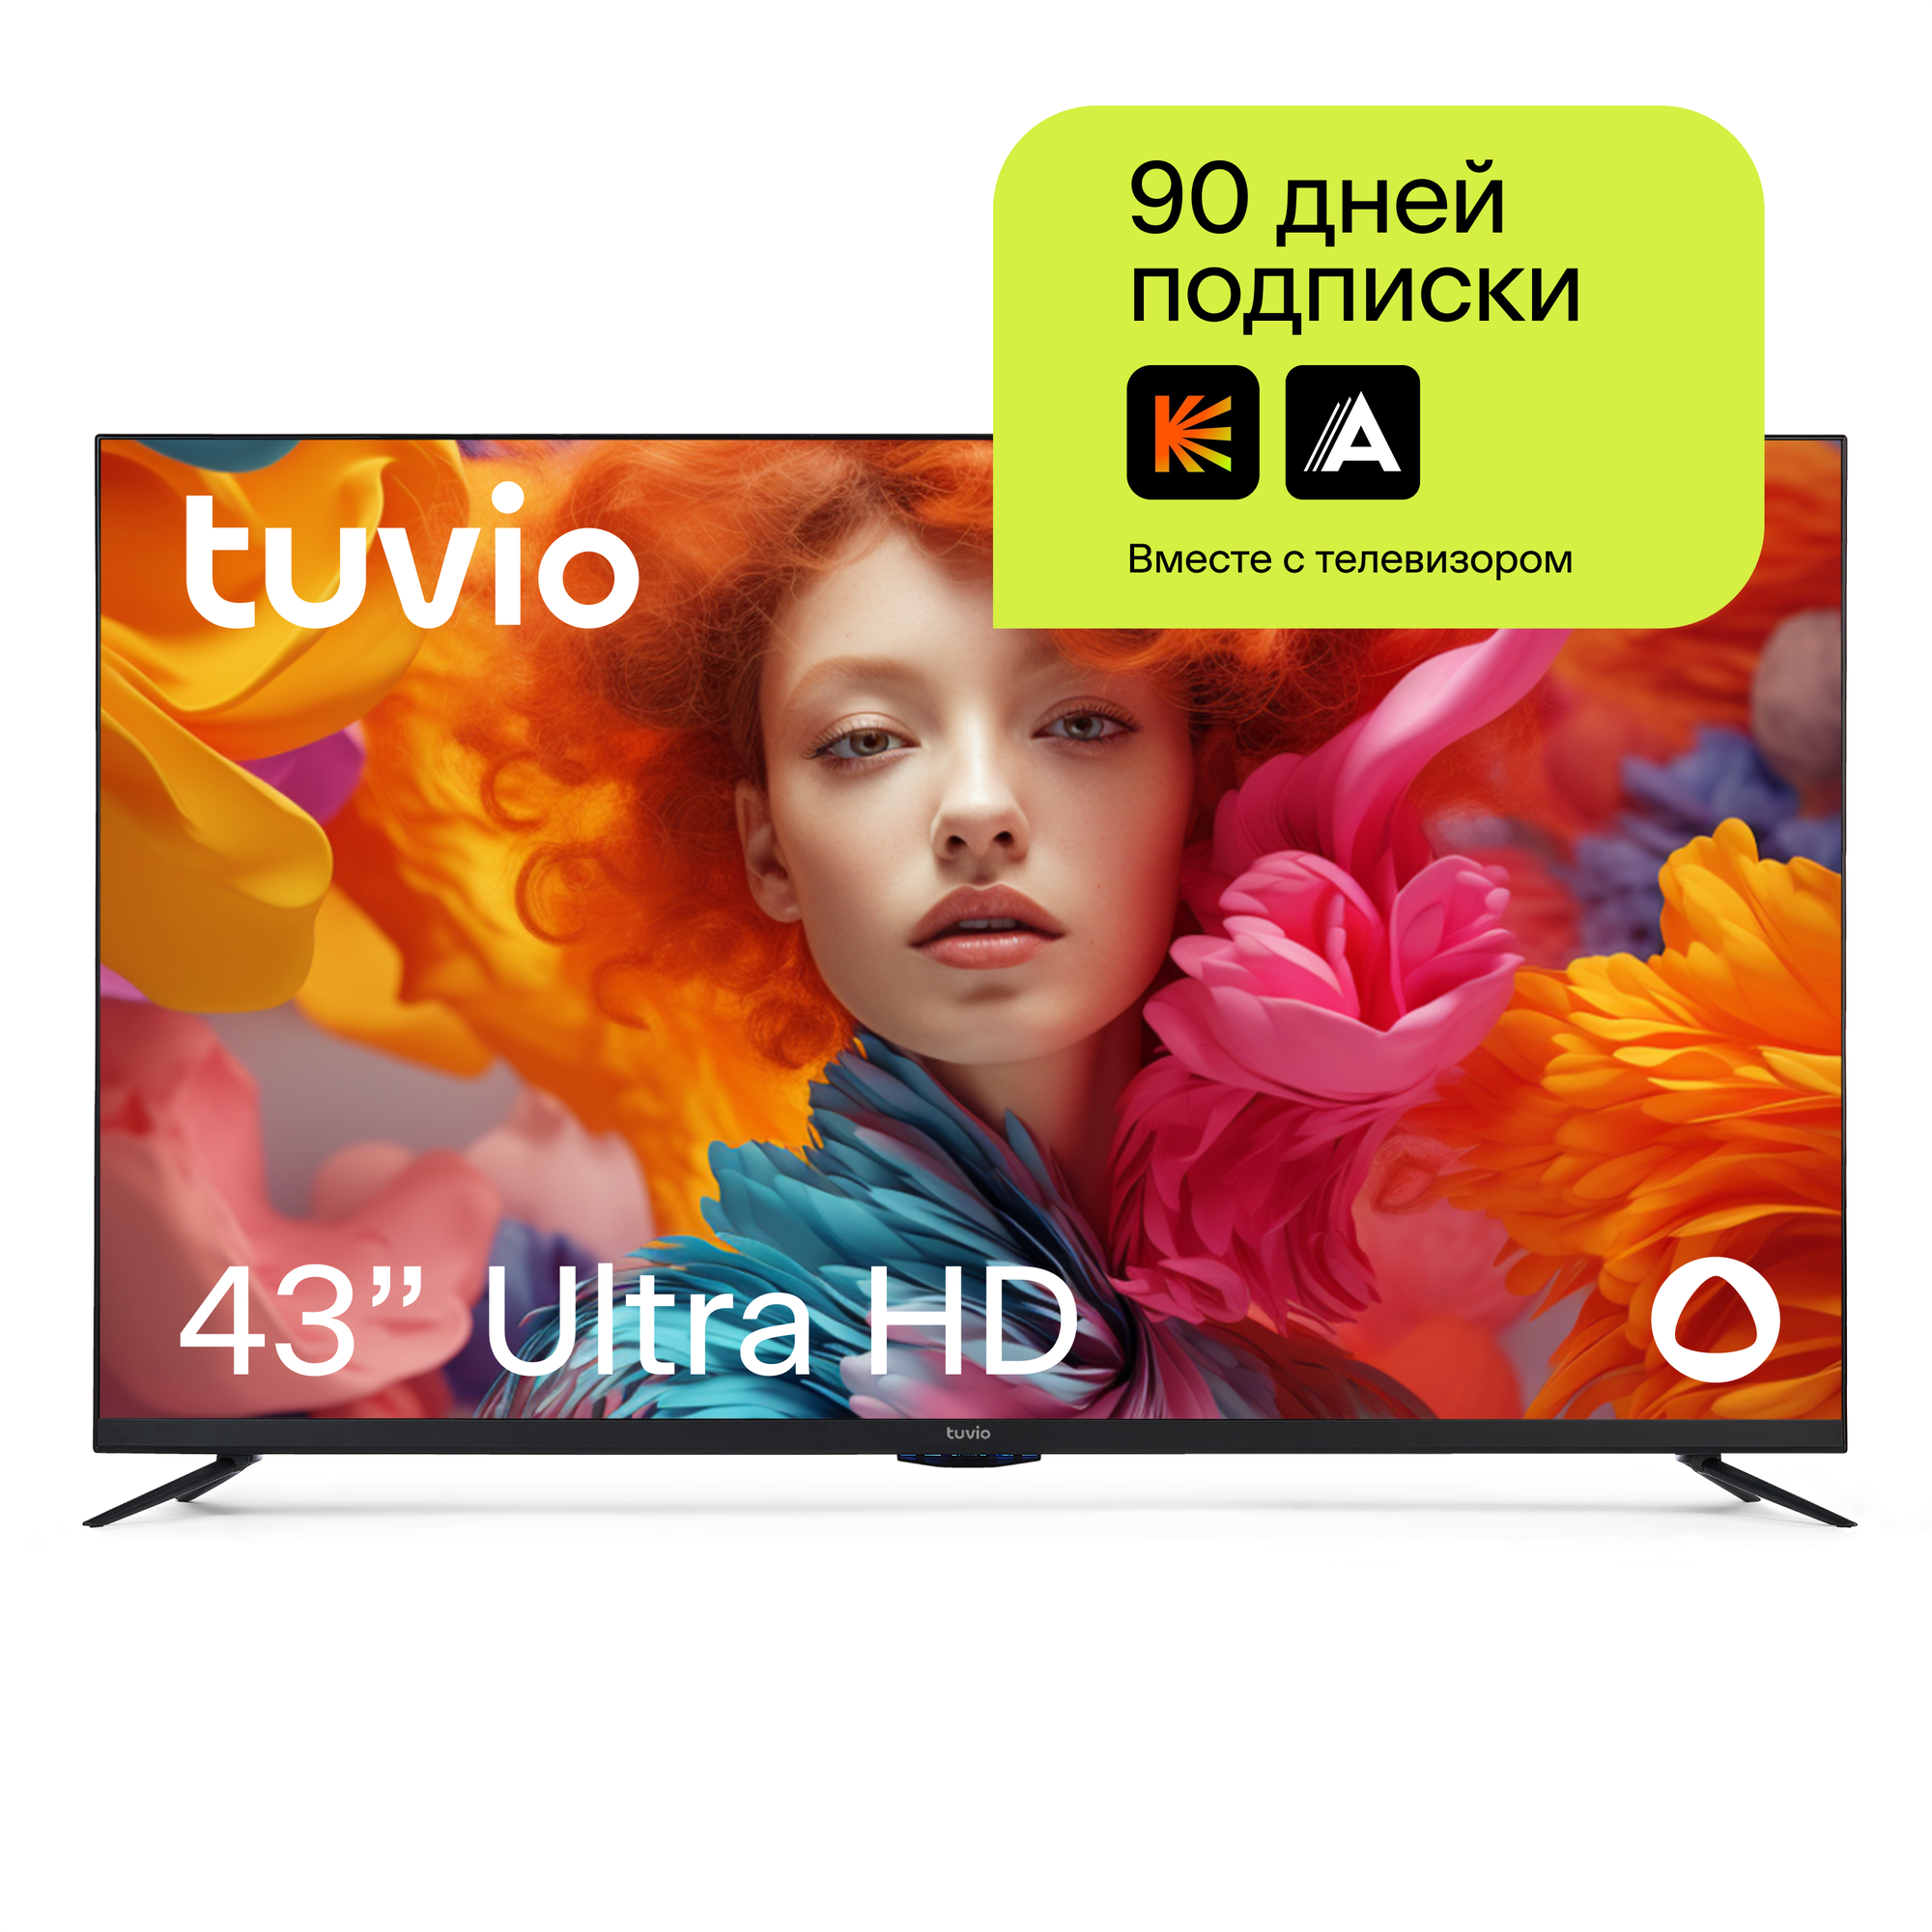 43” Телевизор Tuvio 4К ULTRA HD DLED на платформе Яндекс.ТВ черный